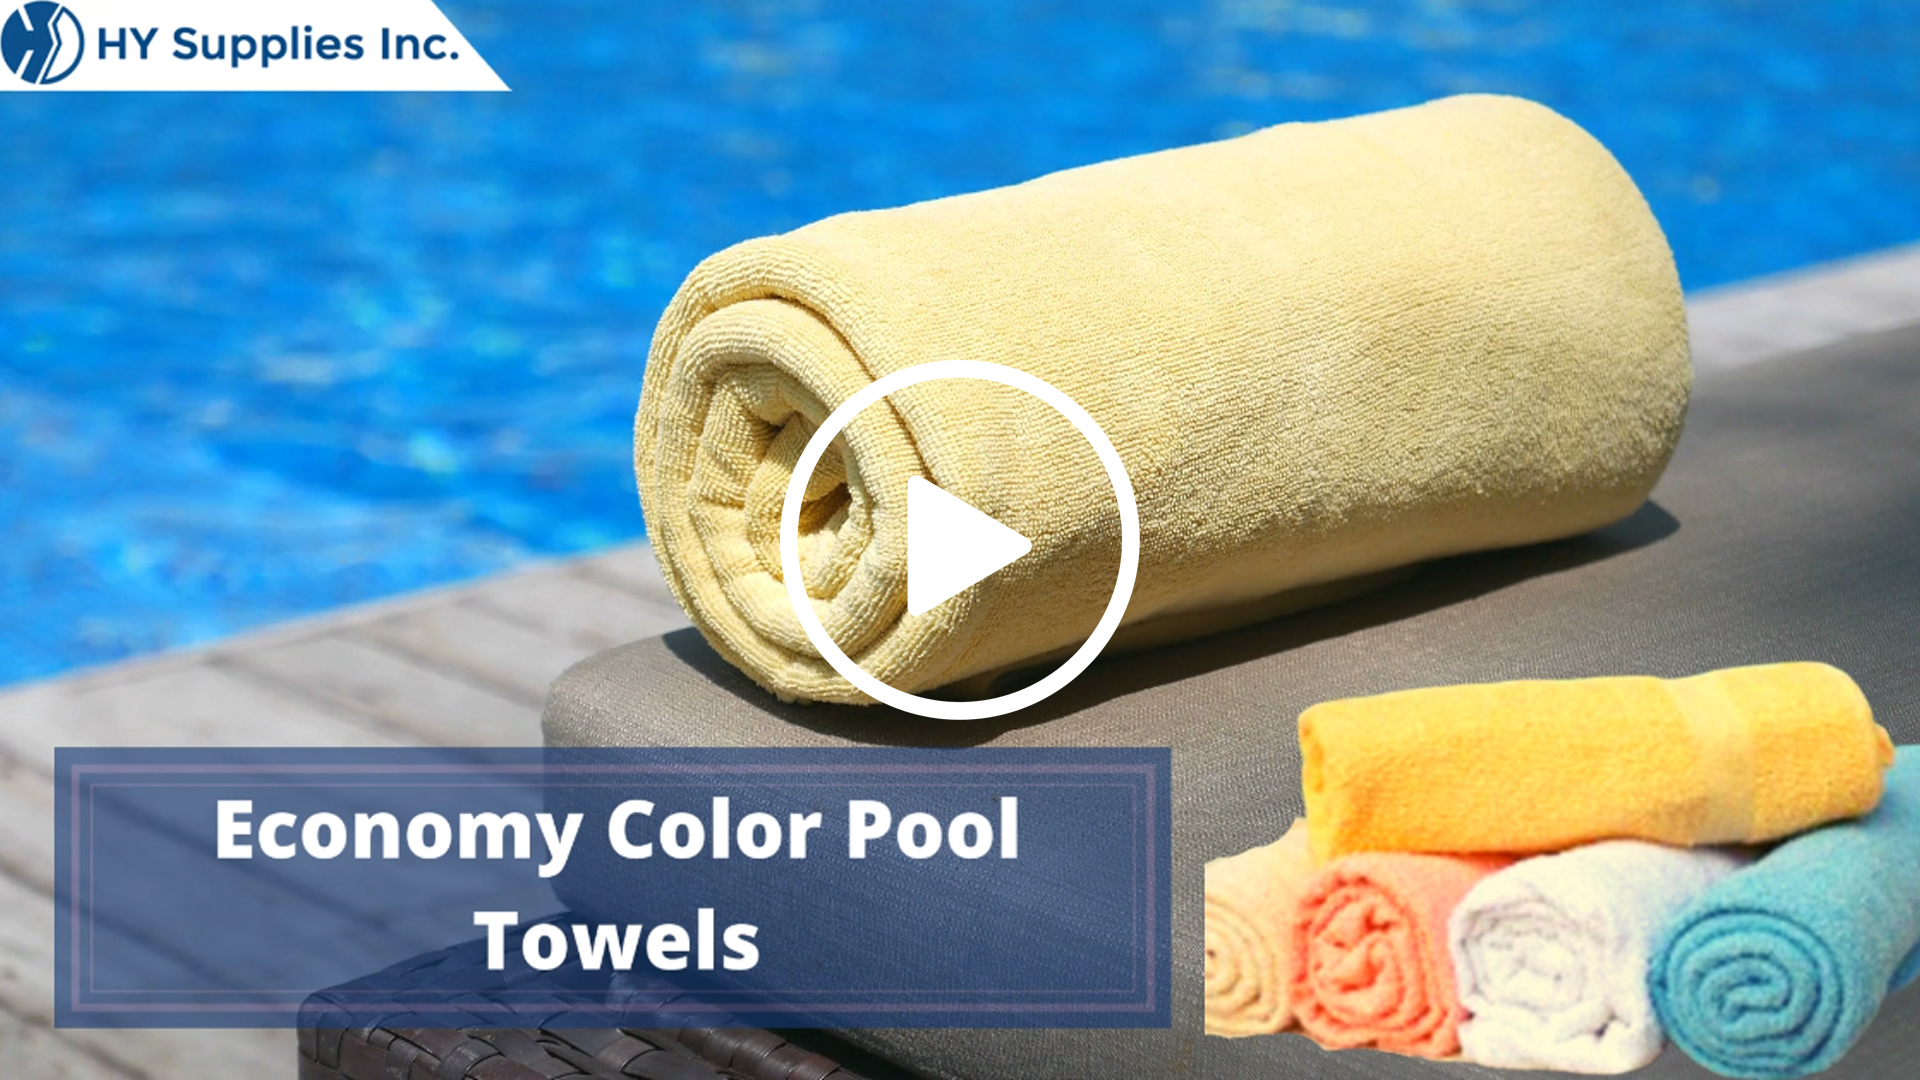 https://hysupplies.net/SocialMediaImages/81234b16-6457-4f2b-883e-21fec7fa5270_Economy-Color-Pool-Towels.jpg